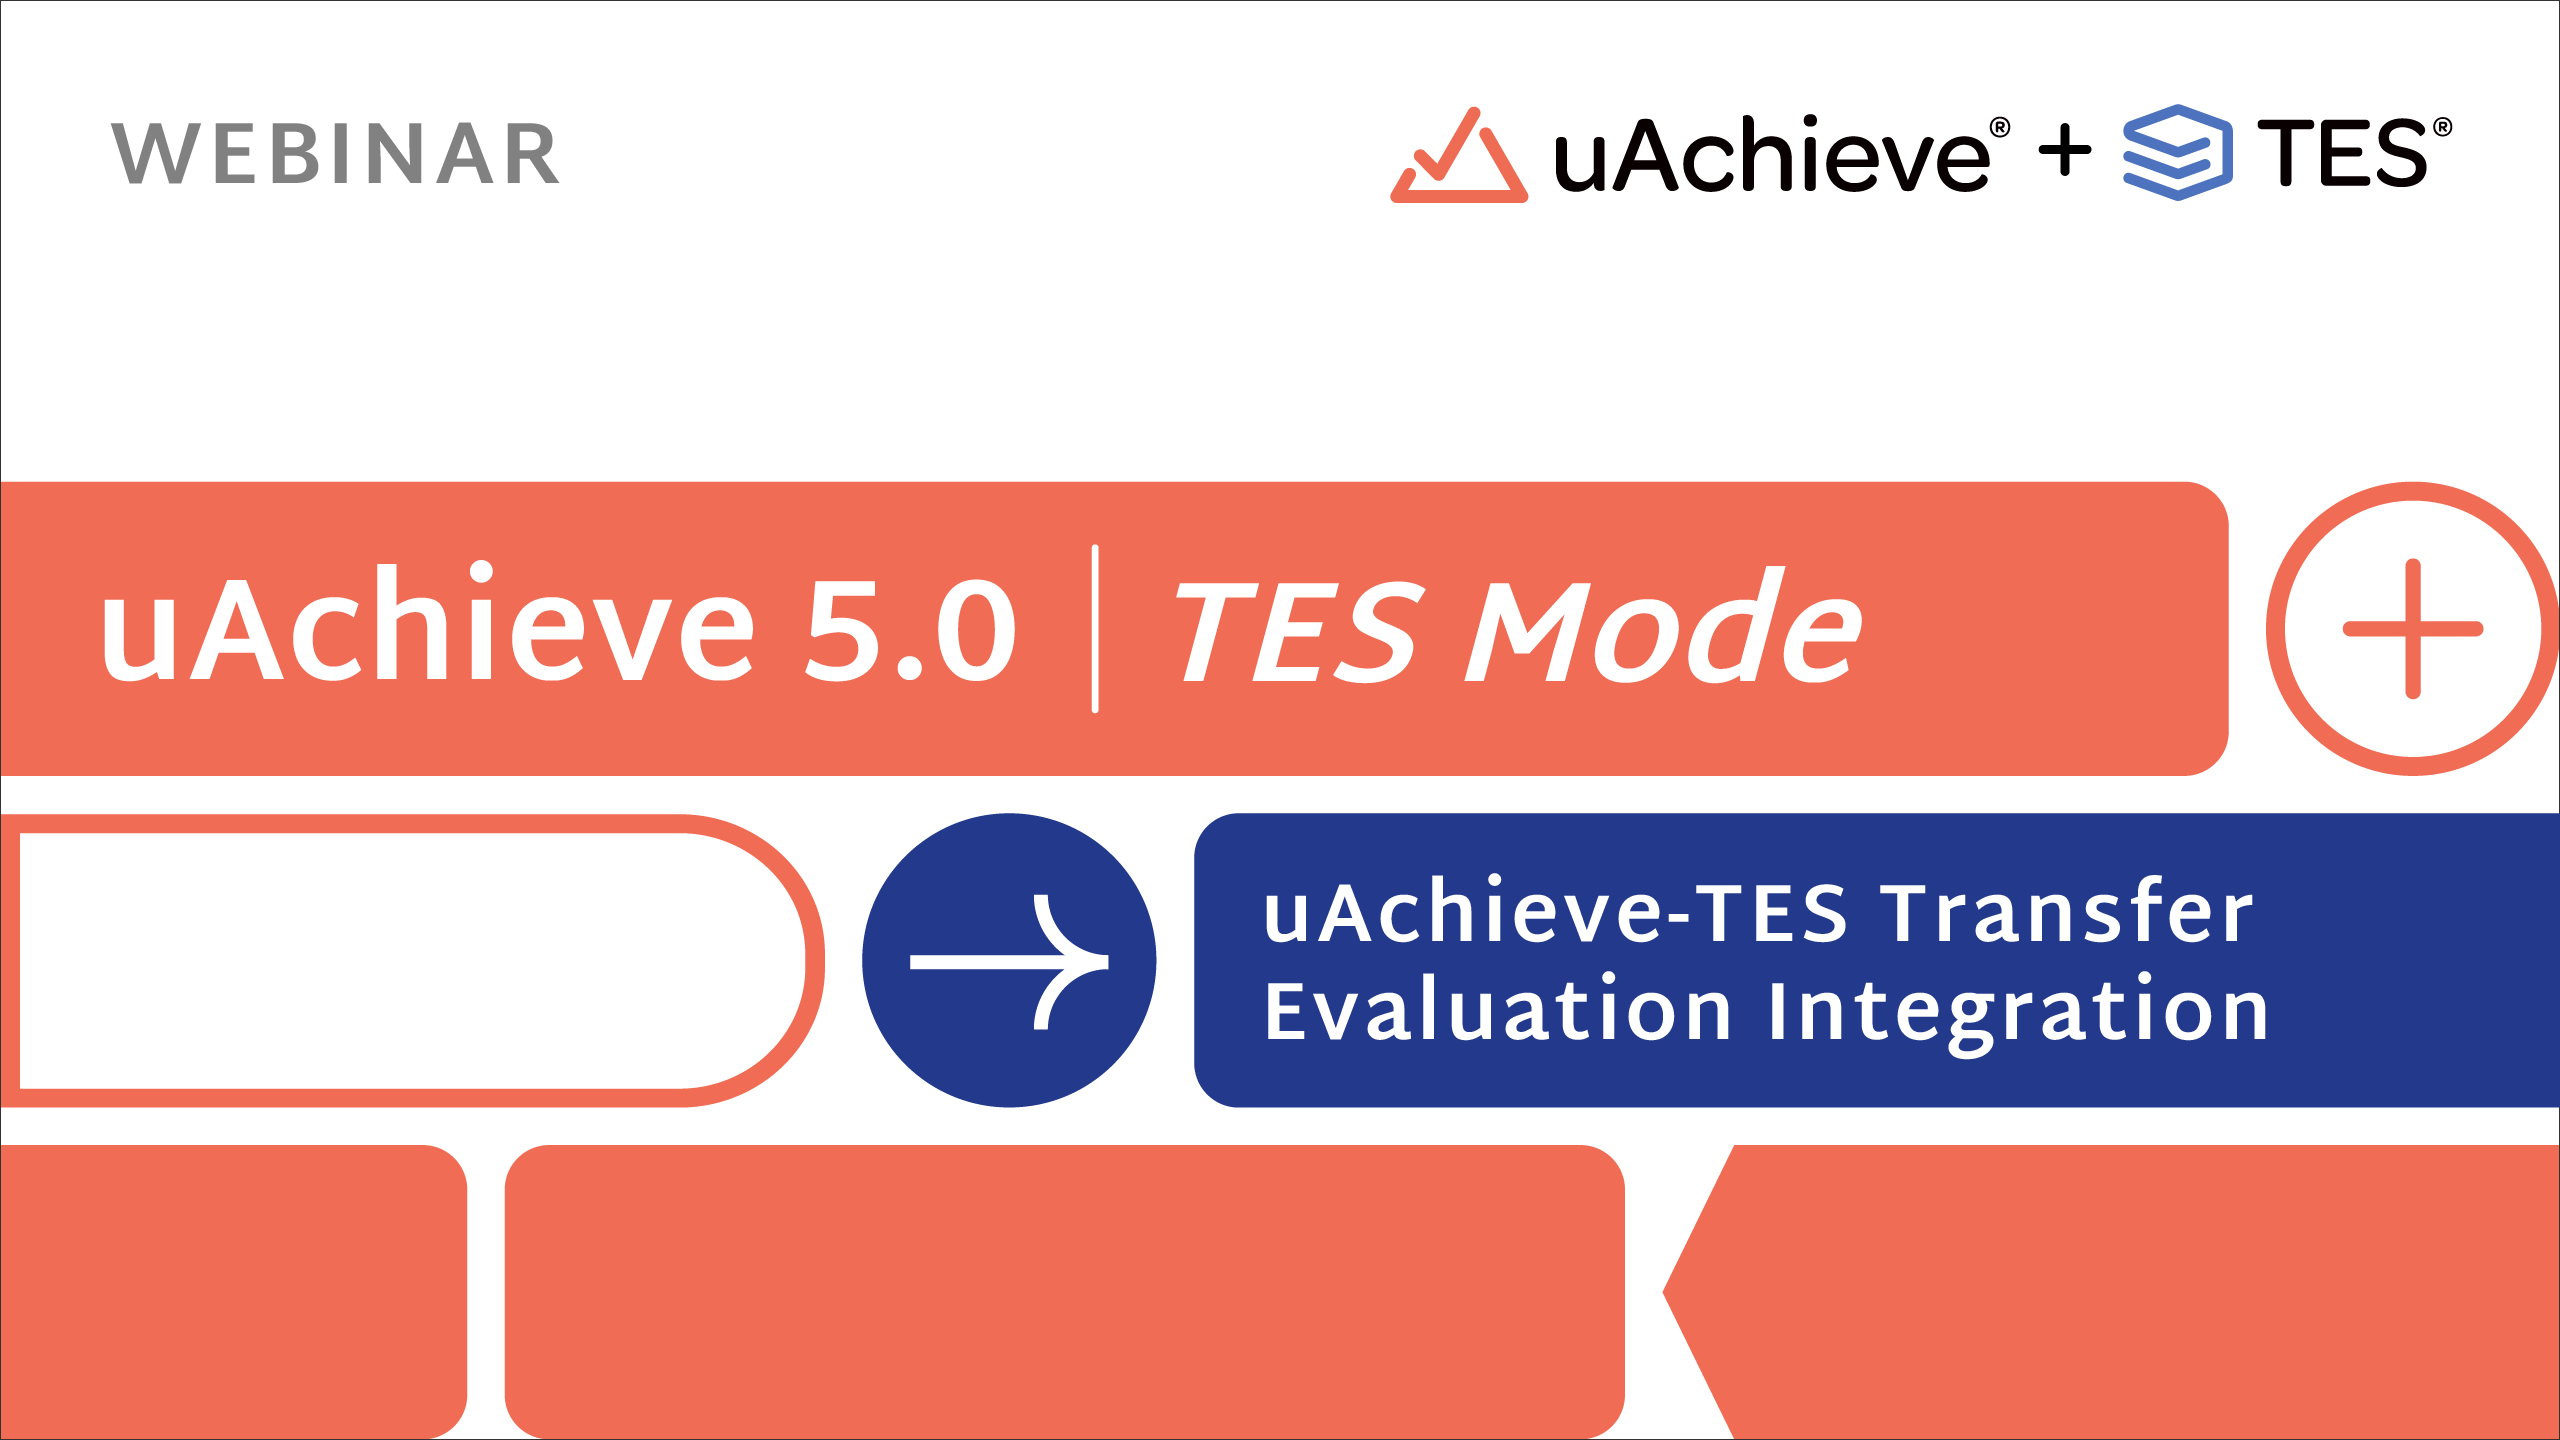 uAchieve 5.0 TES Mode: The uAchieve-TES Transfer Evaluation Integration